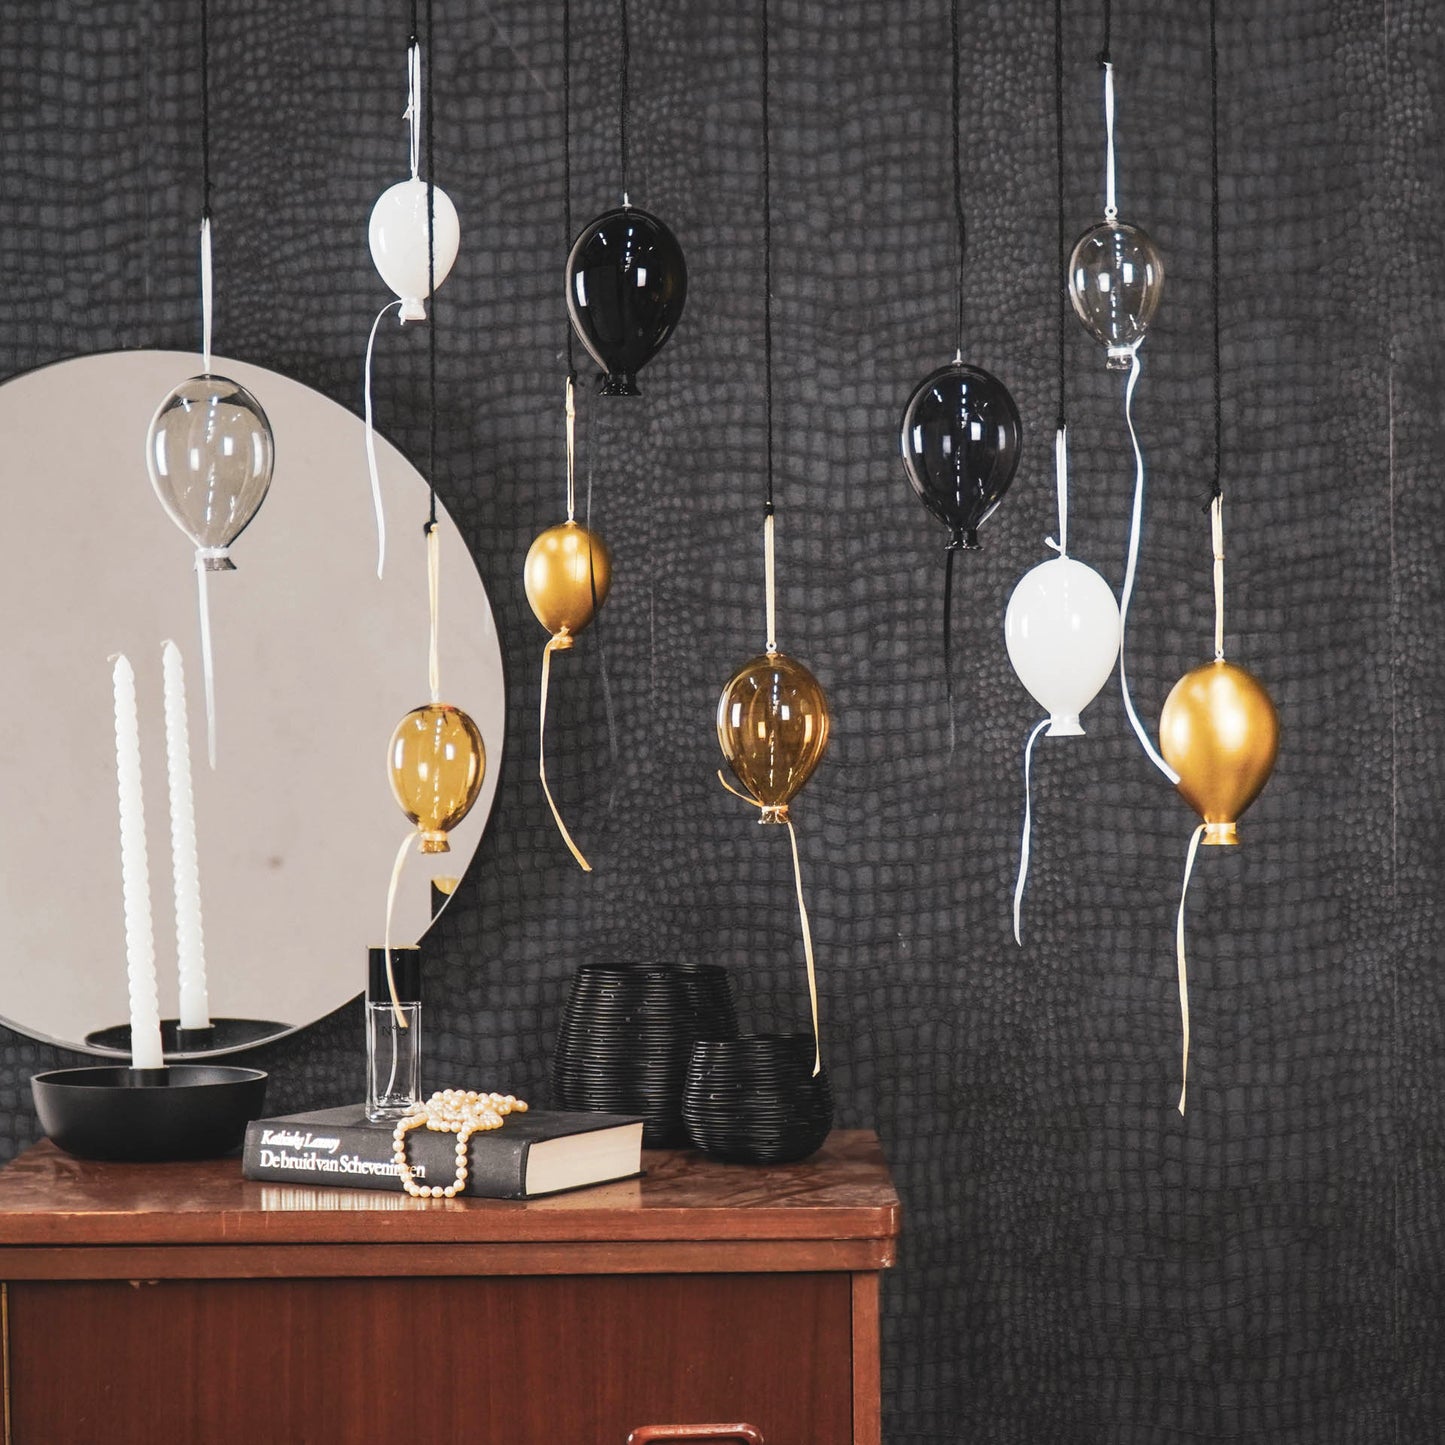 HV Glass Balloonhanger - Gold - M - 6.5x10.5cm